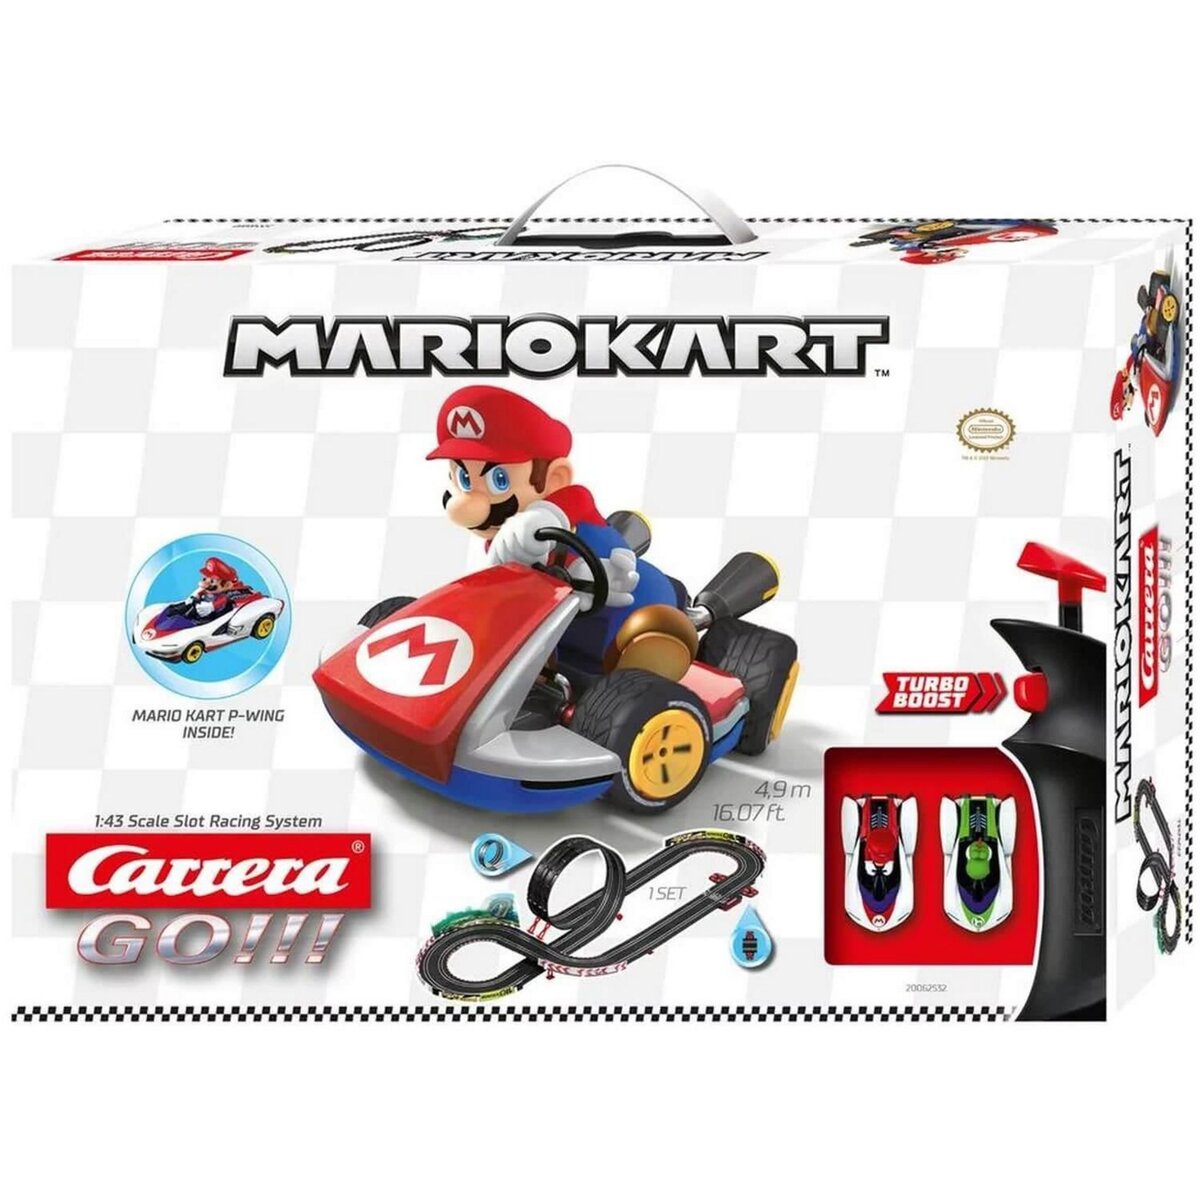 Carrera Circuit de voiture Carrera Go : Mario Kart P-Wing